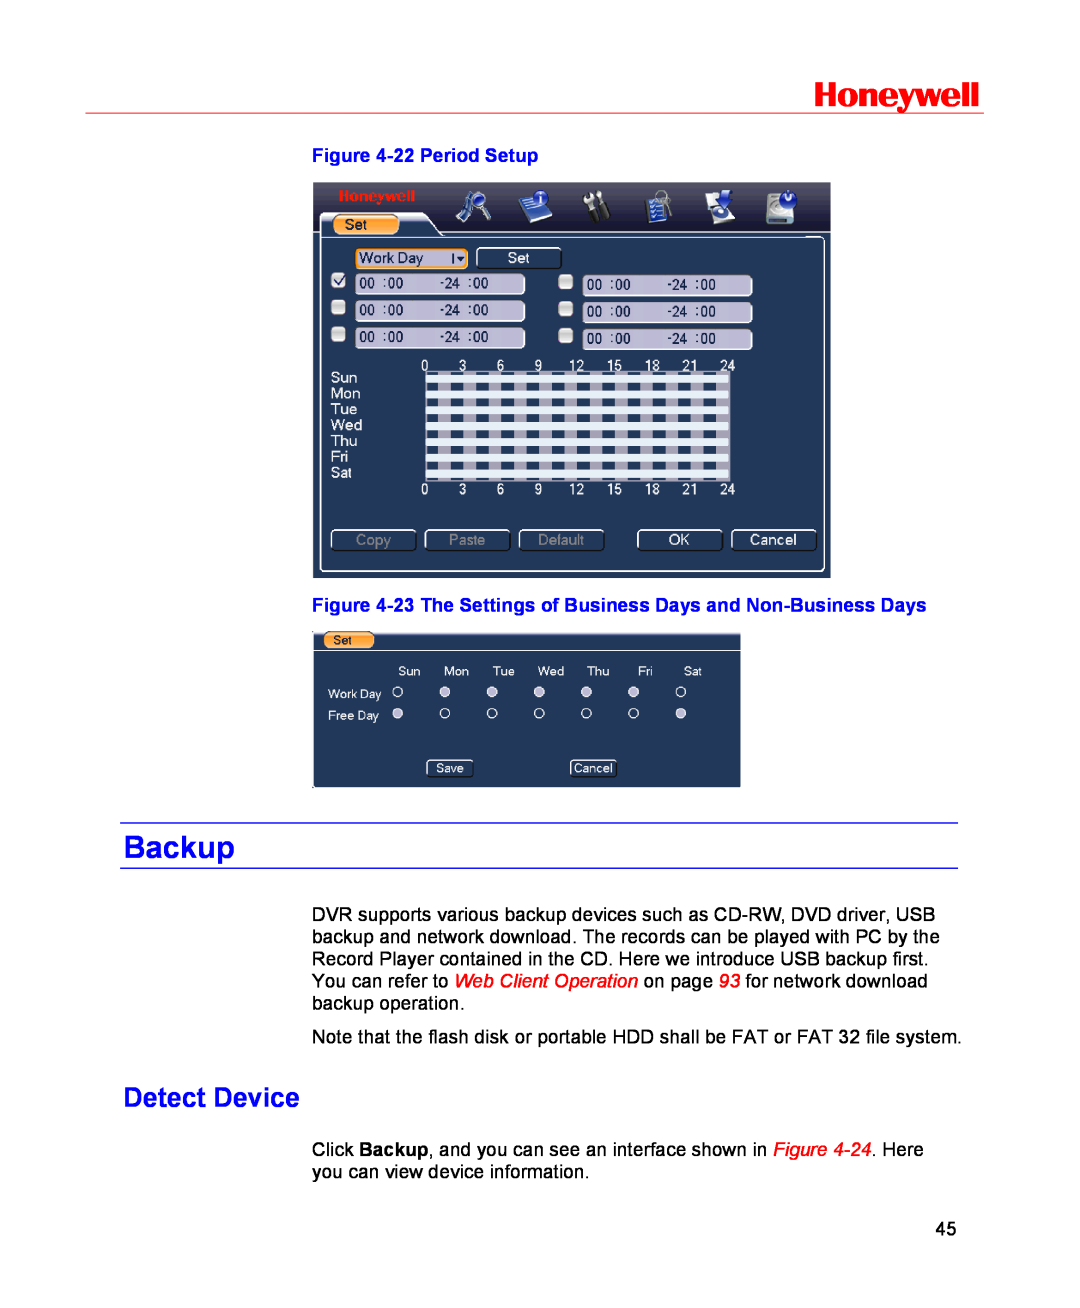 Honeywell HSVR-16, HSVR-04 user manual Backup, Detect Device, Honeywell, 22 Period Setup 